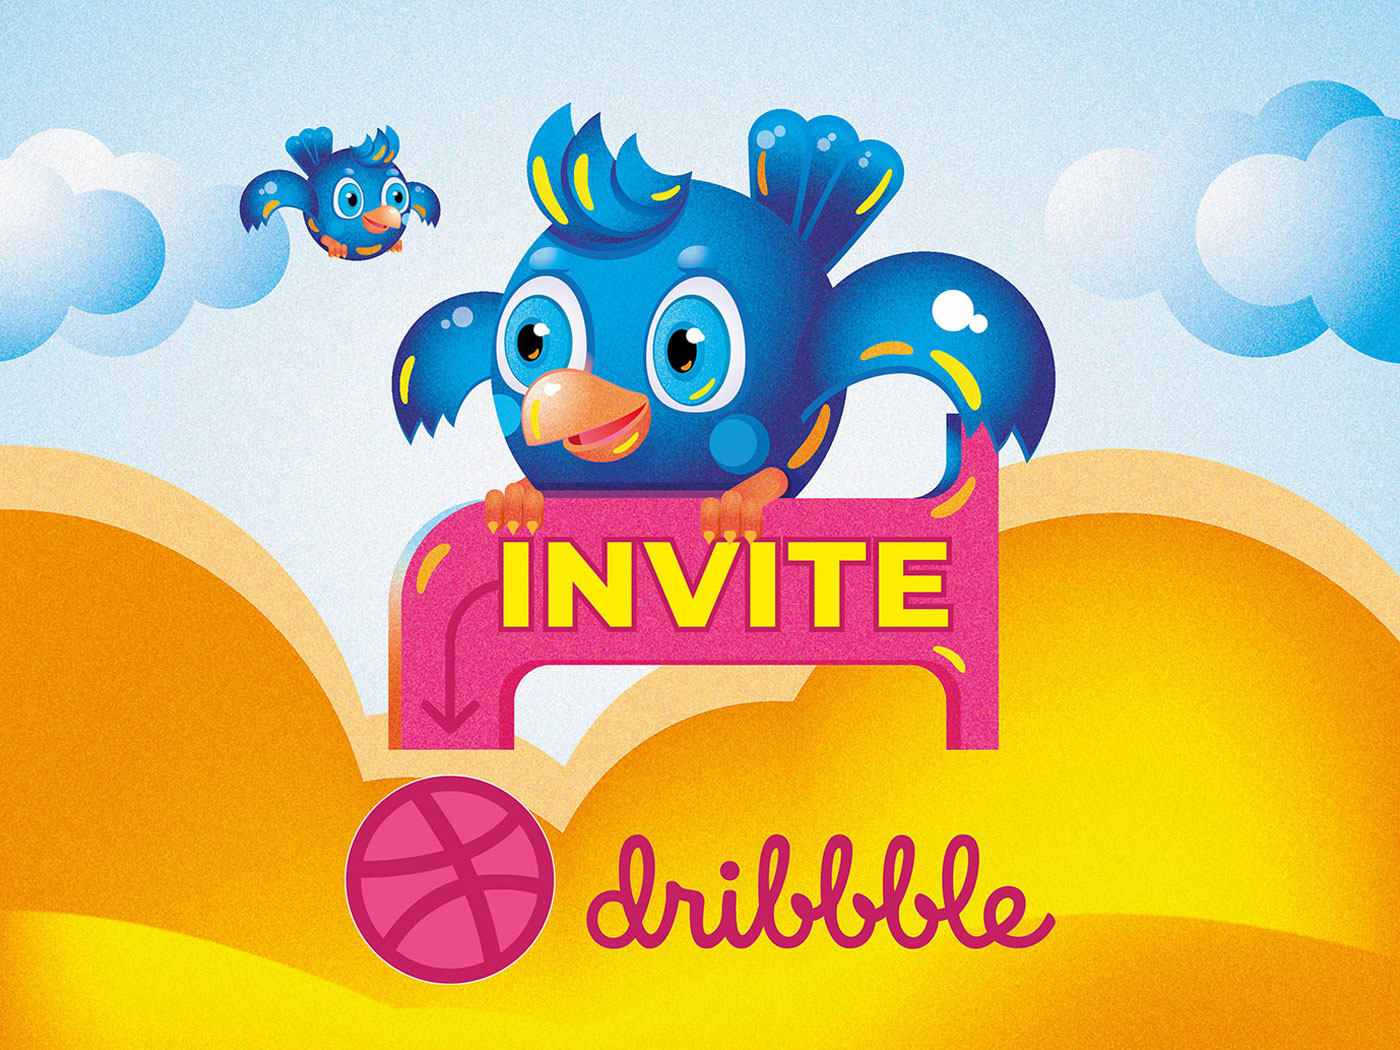 Invite dribbble